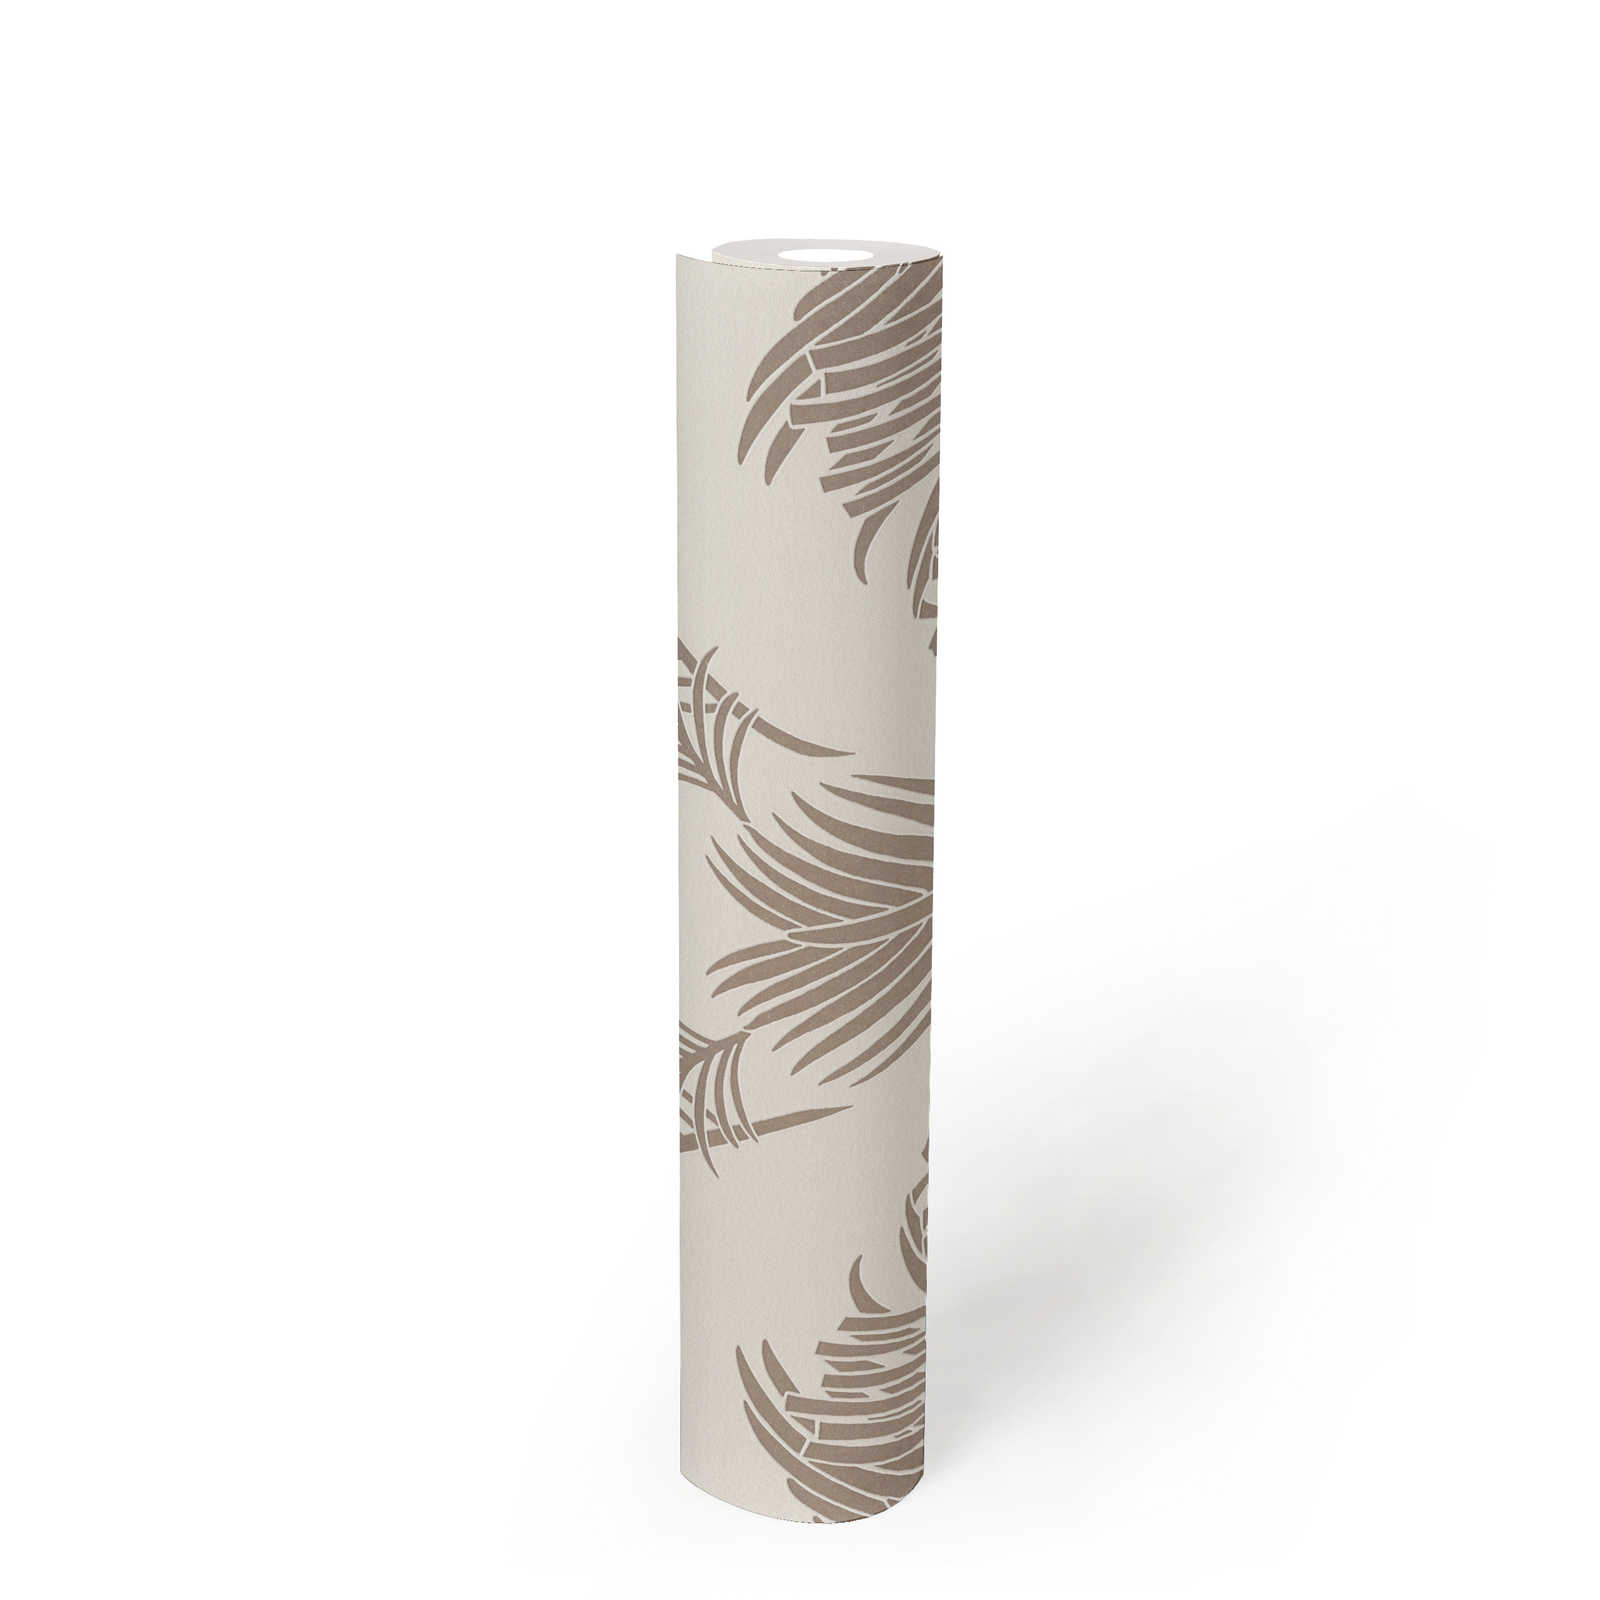             Vliestapete Palmenblätter in Rosa mit Metallic & Matt Effekt
        